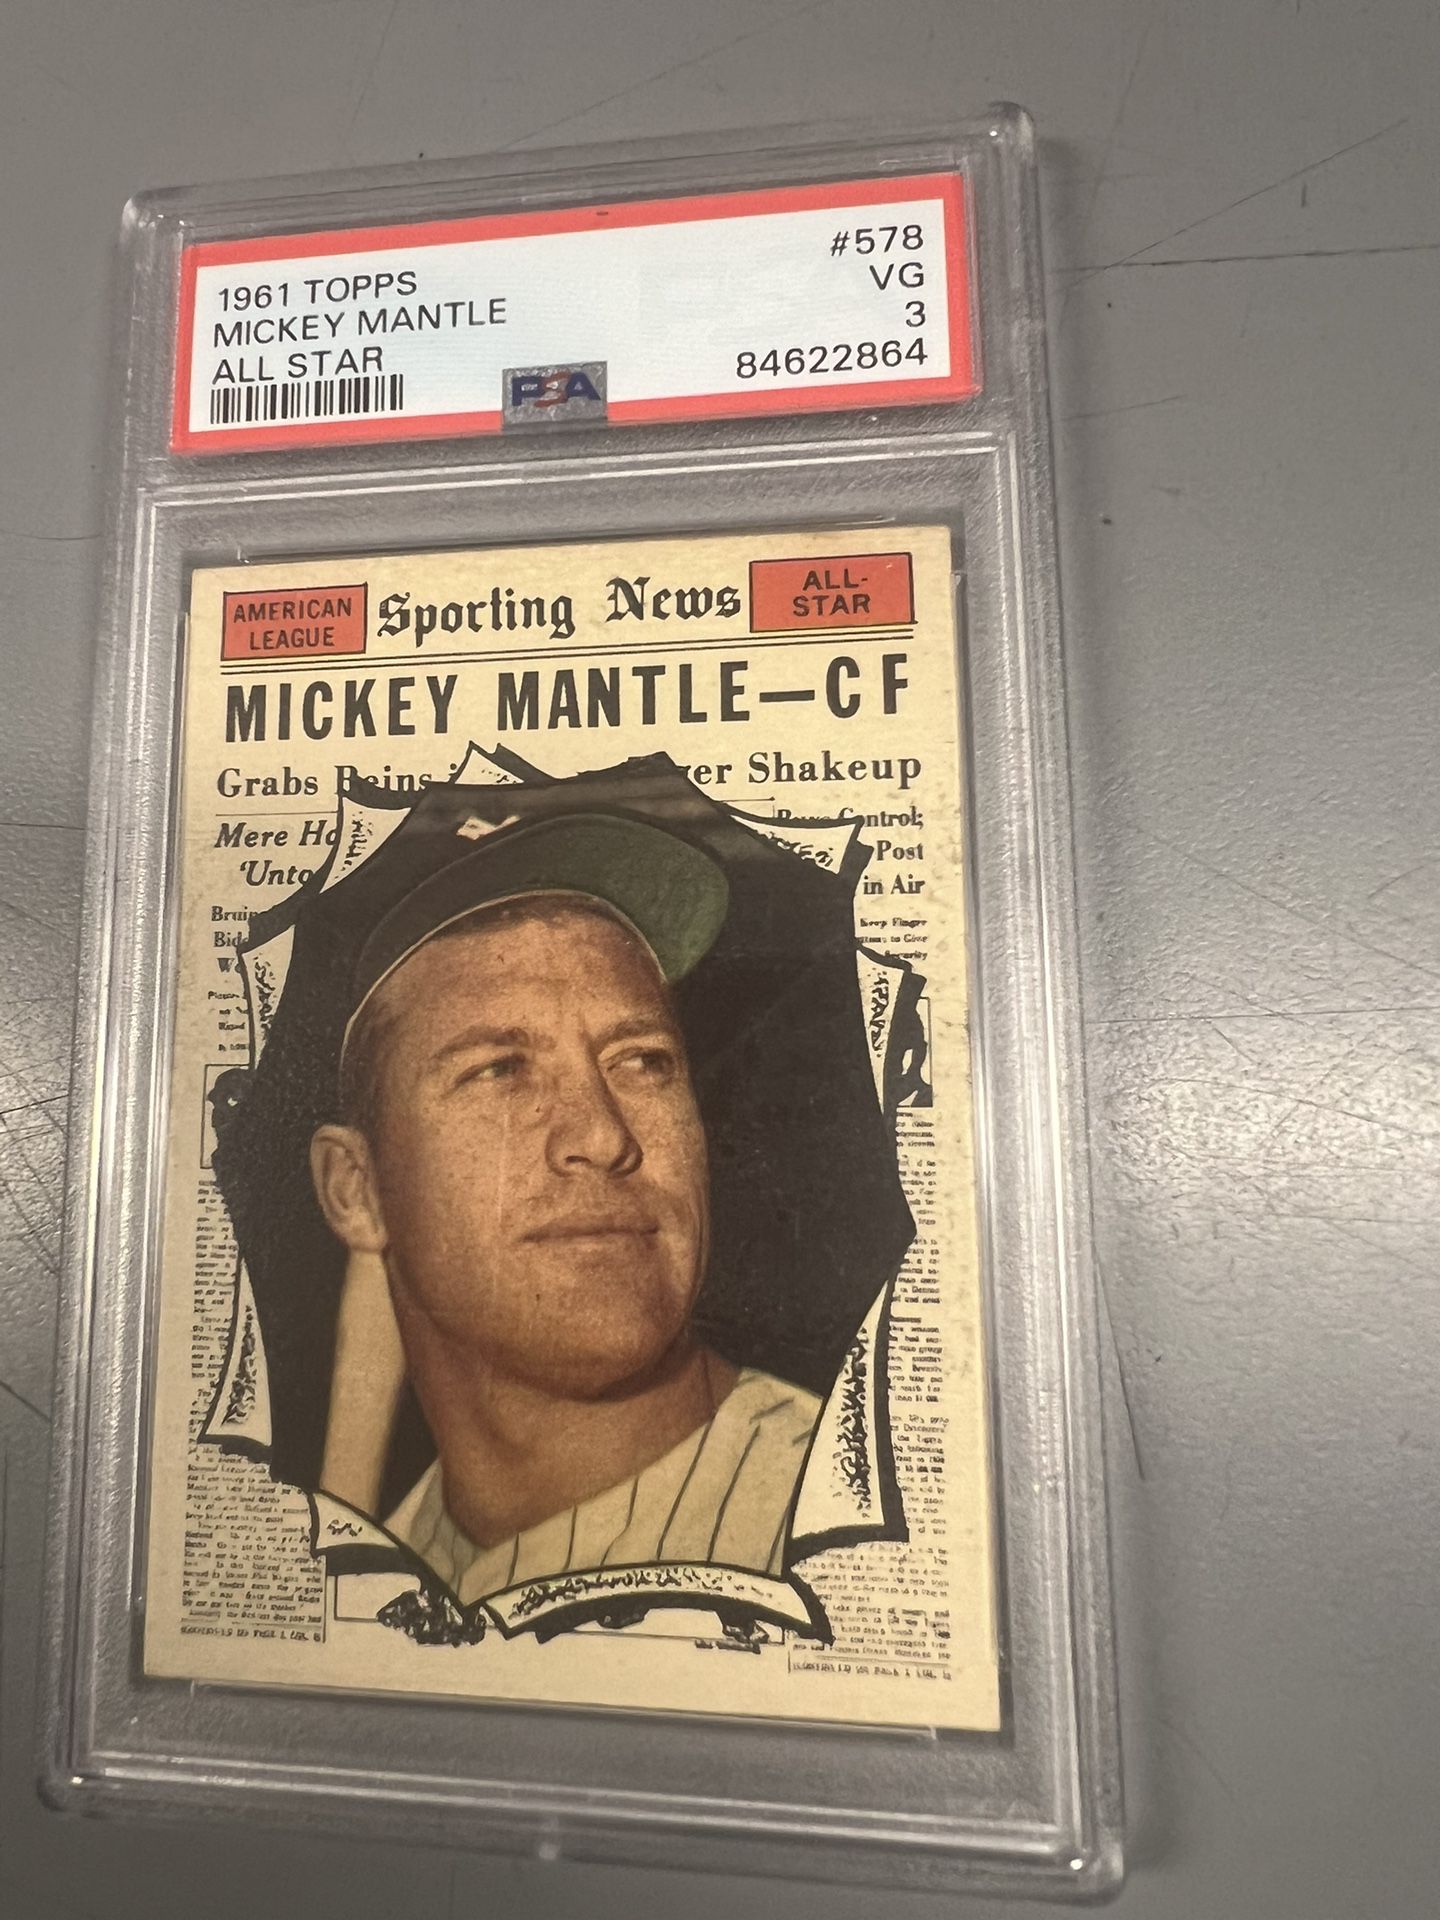 61 Mantel Baseball Card